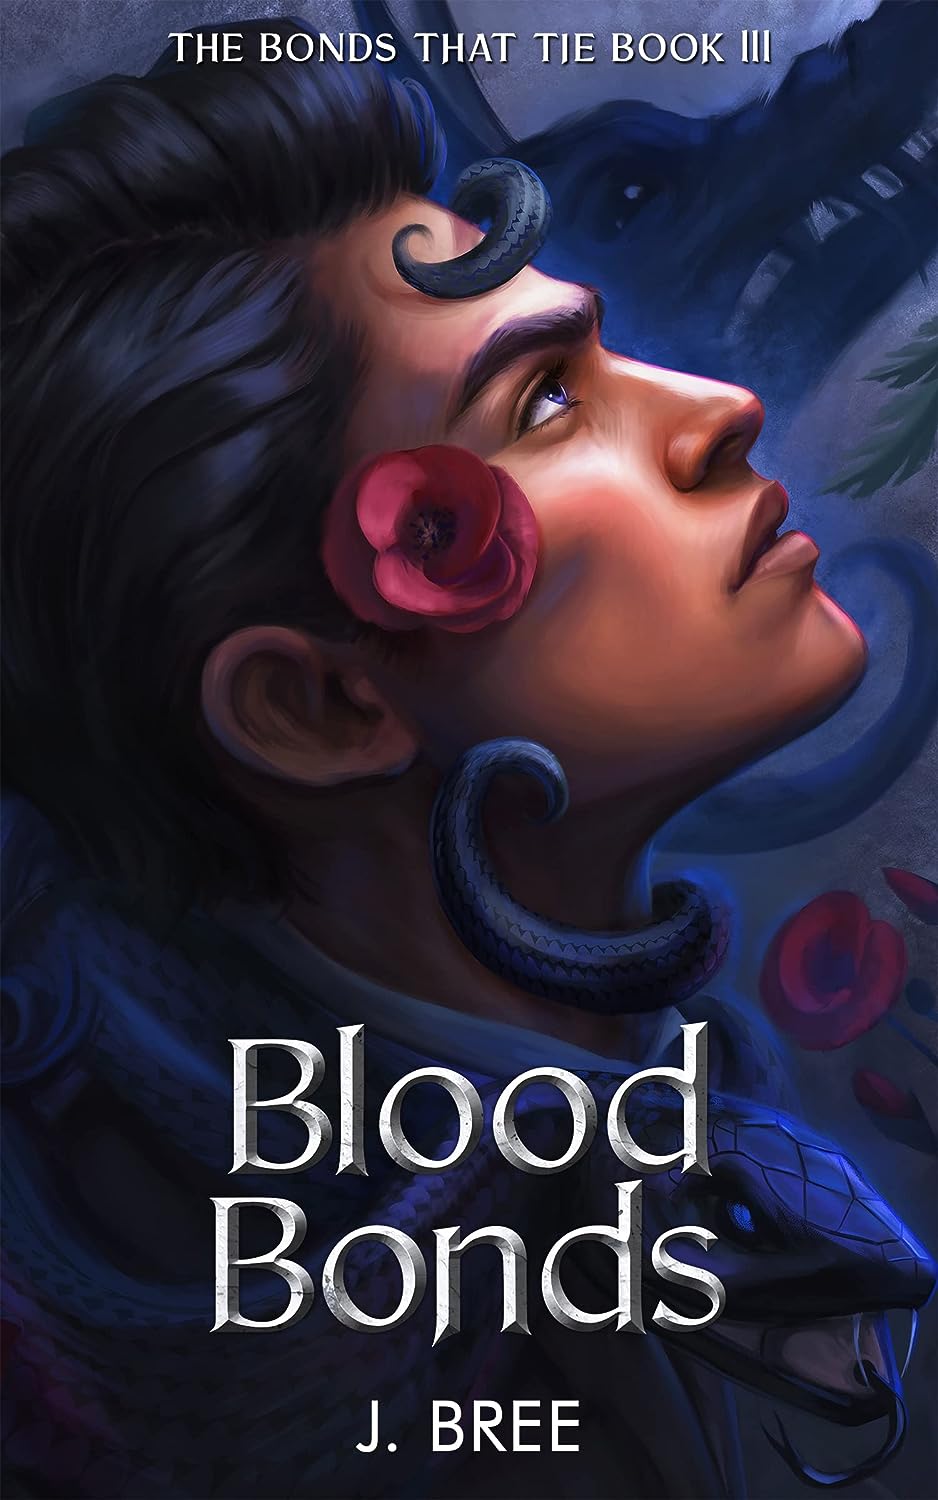 Blood Bonds (The Bonds that Tie Book 3) by J. Bree